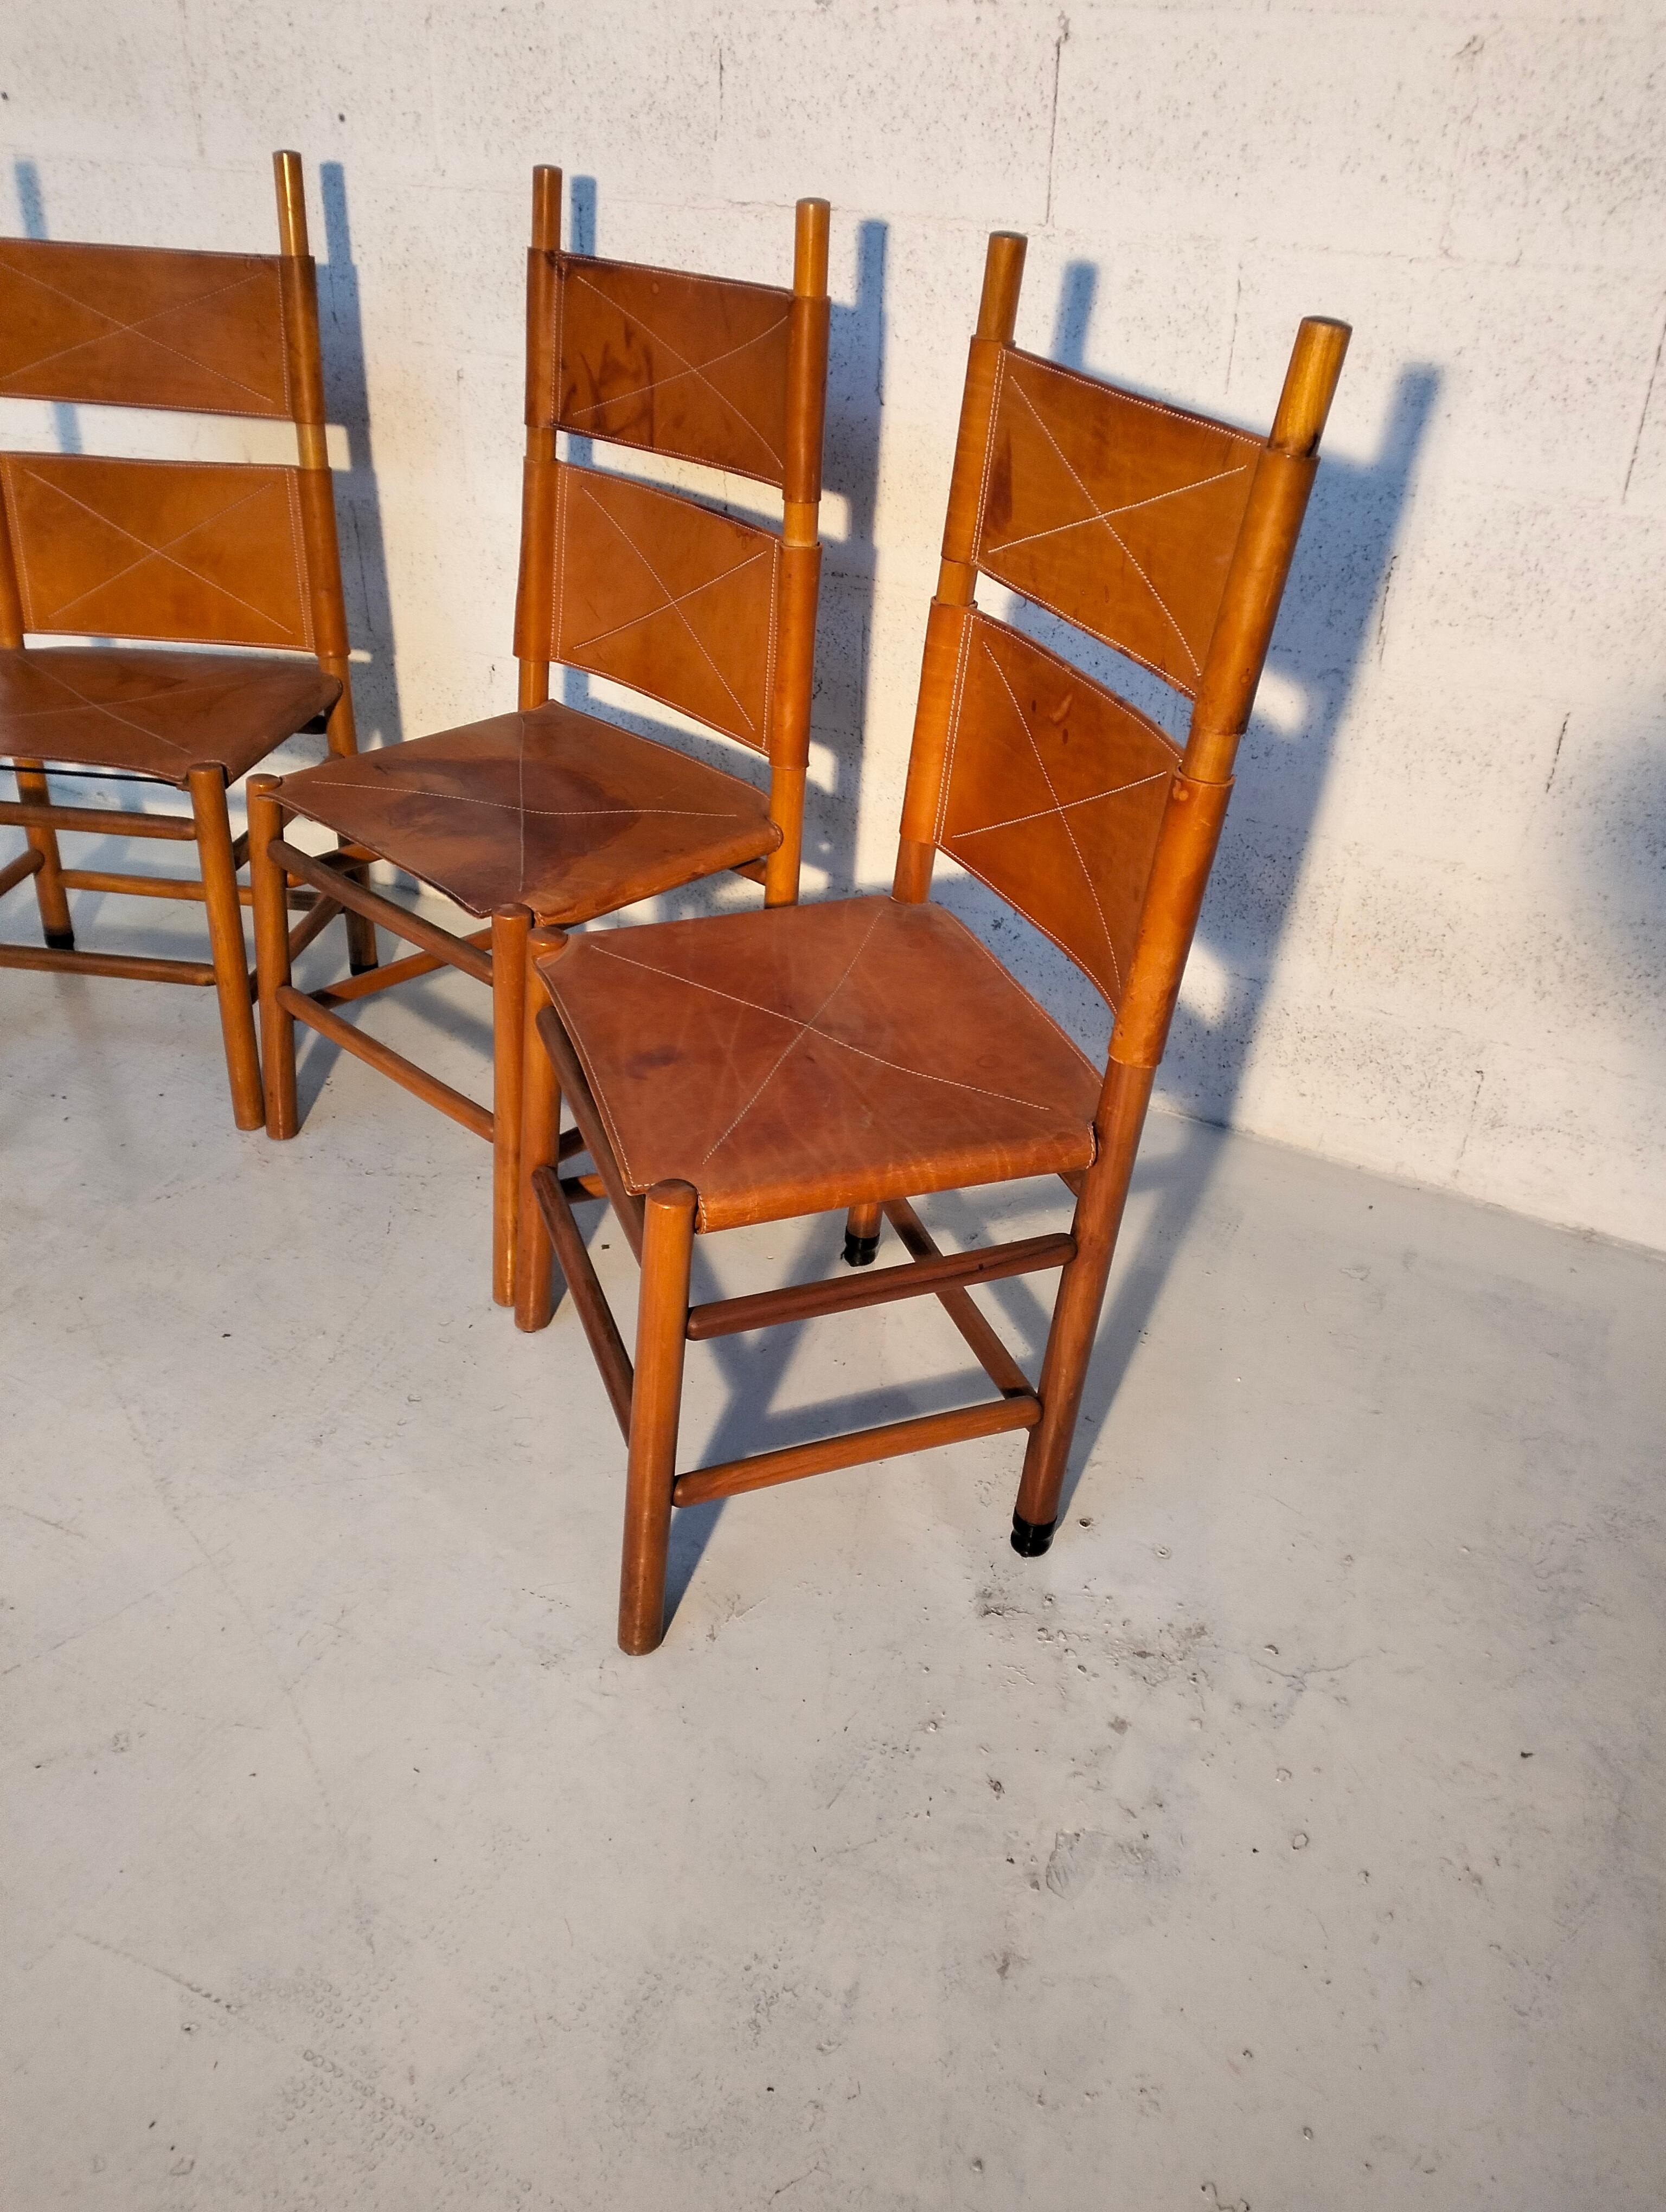 Italian Set of 4 chairs  “Kentucky” model by Carlo Scarpa  for Bernini 70s, 80s